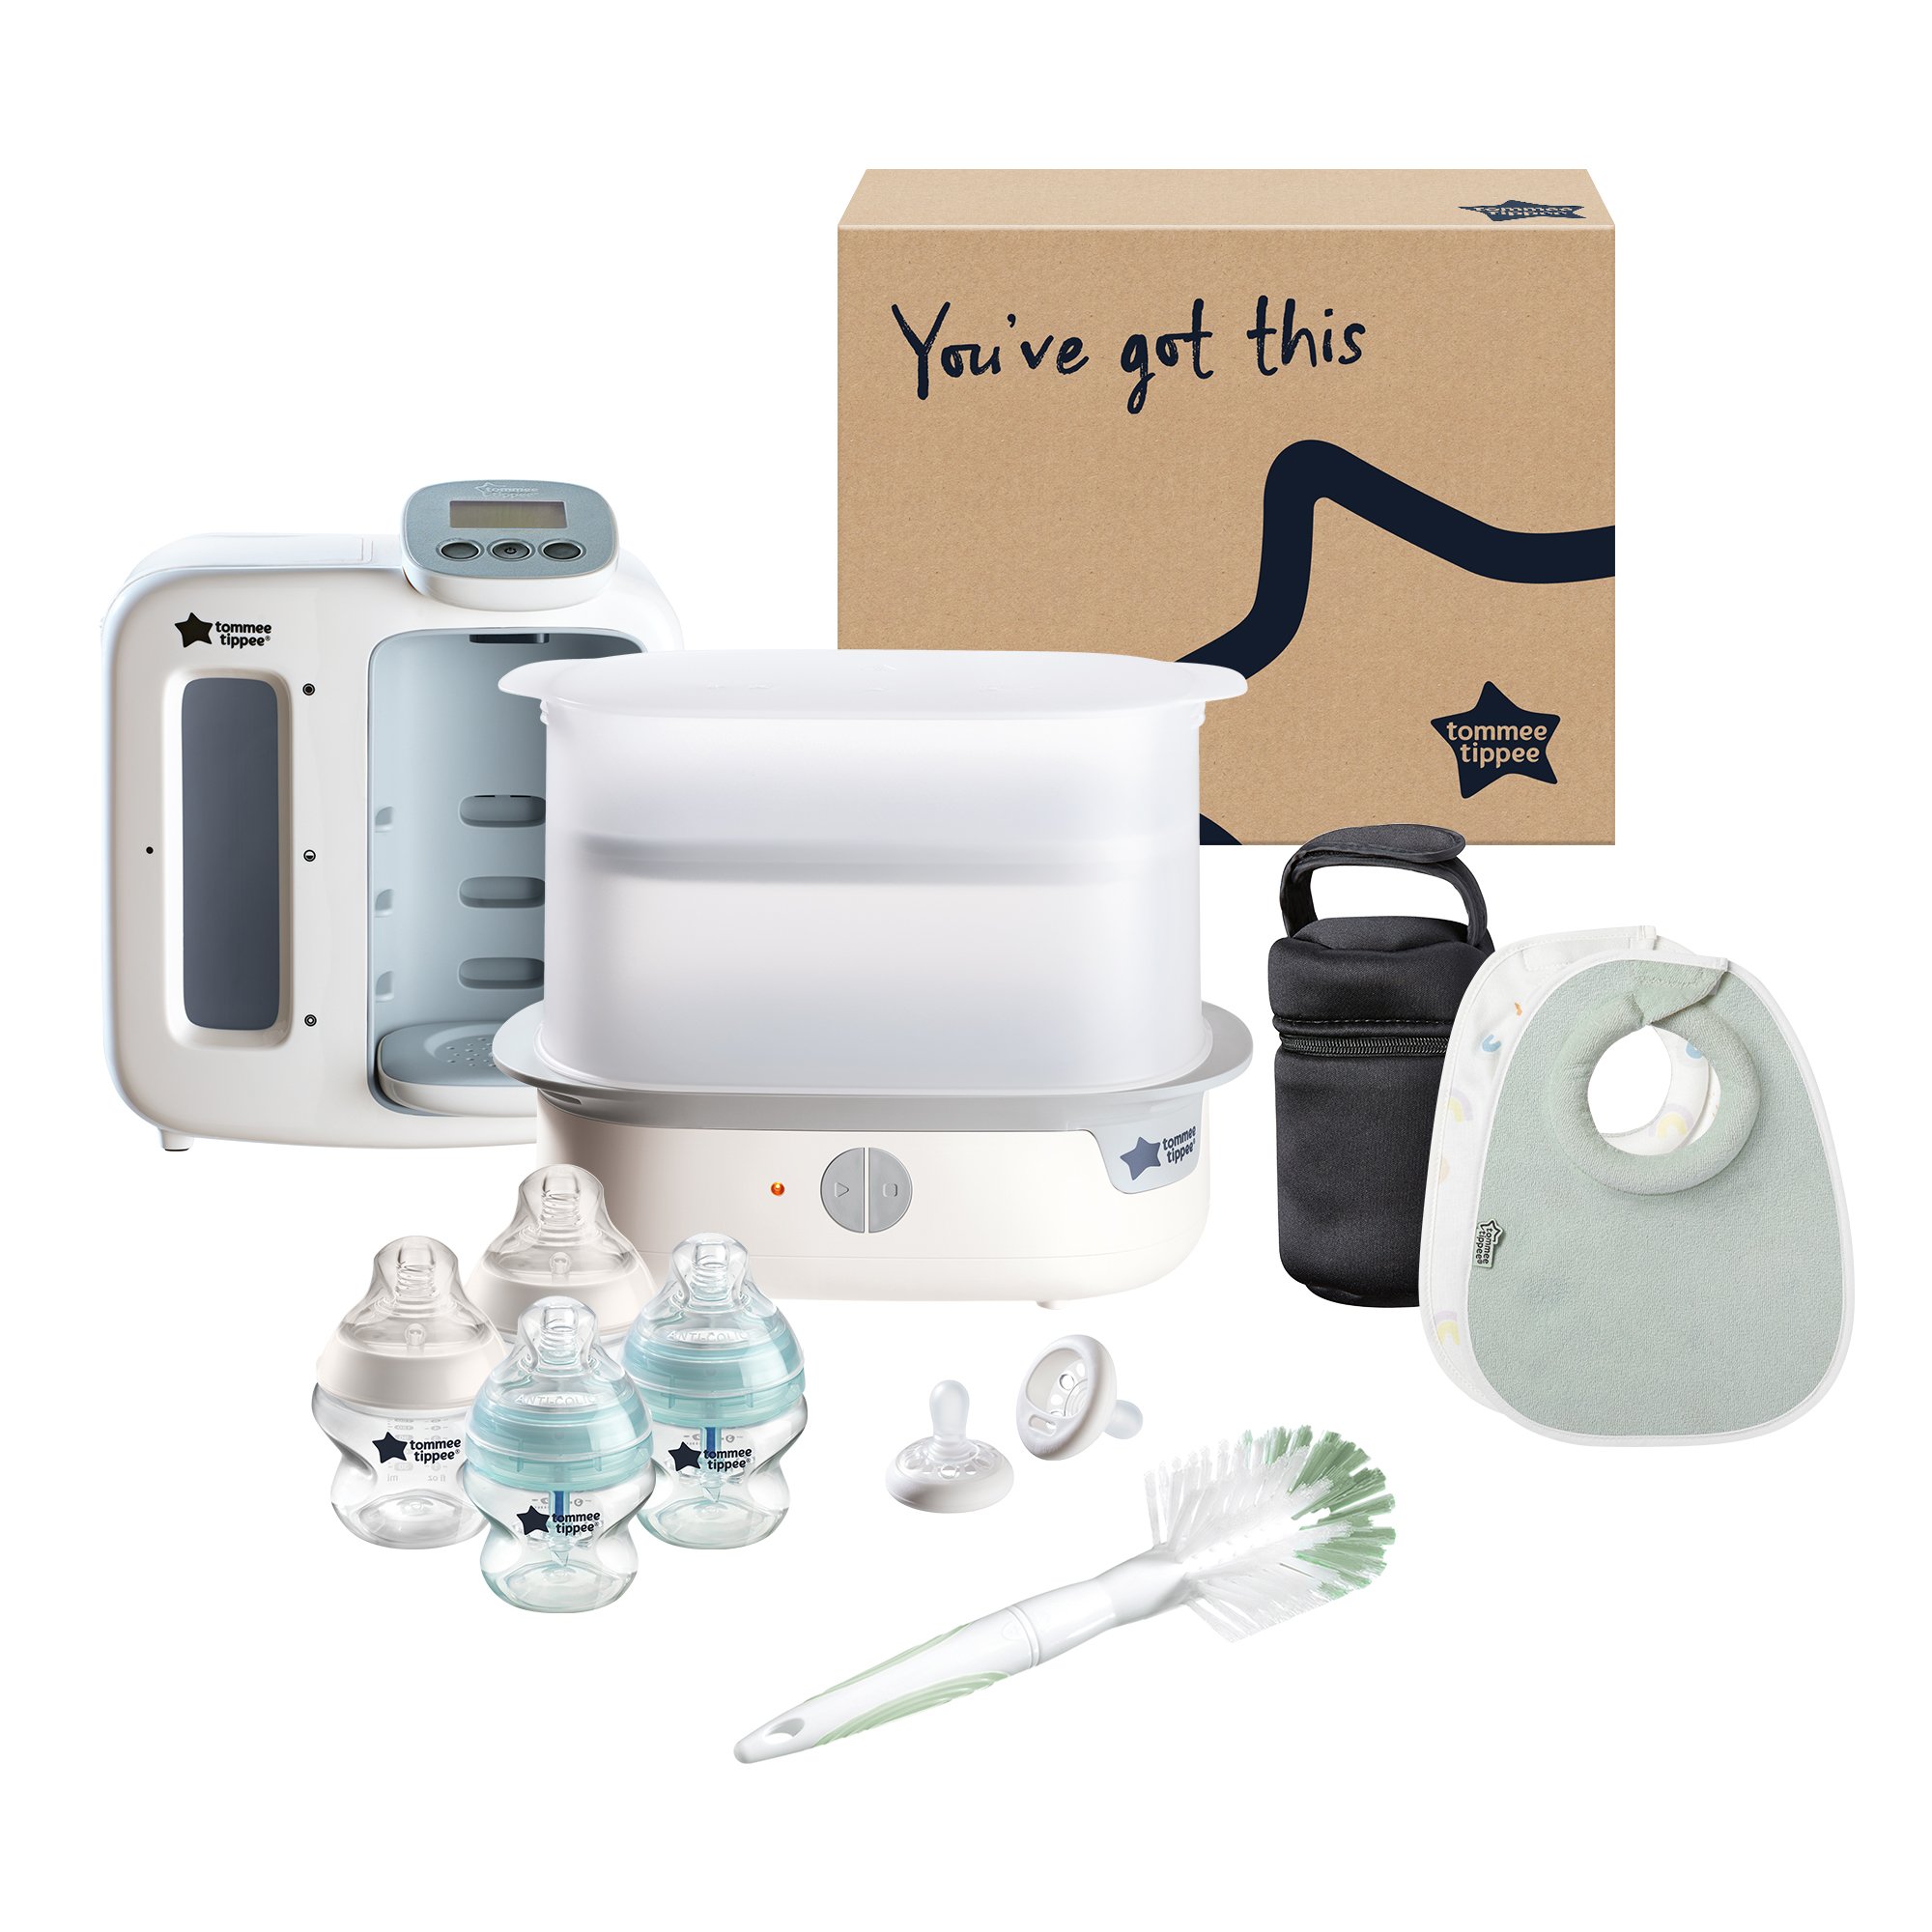 Tommee Tippee Ultimate Feeding Kit with steriliser - White